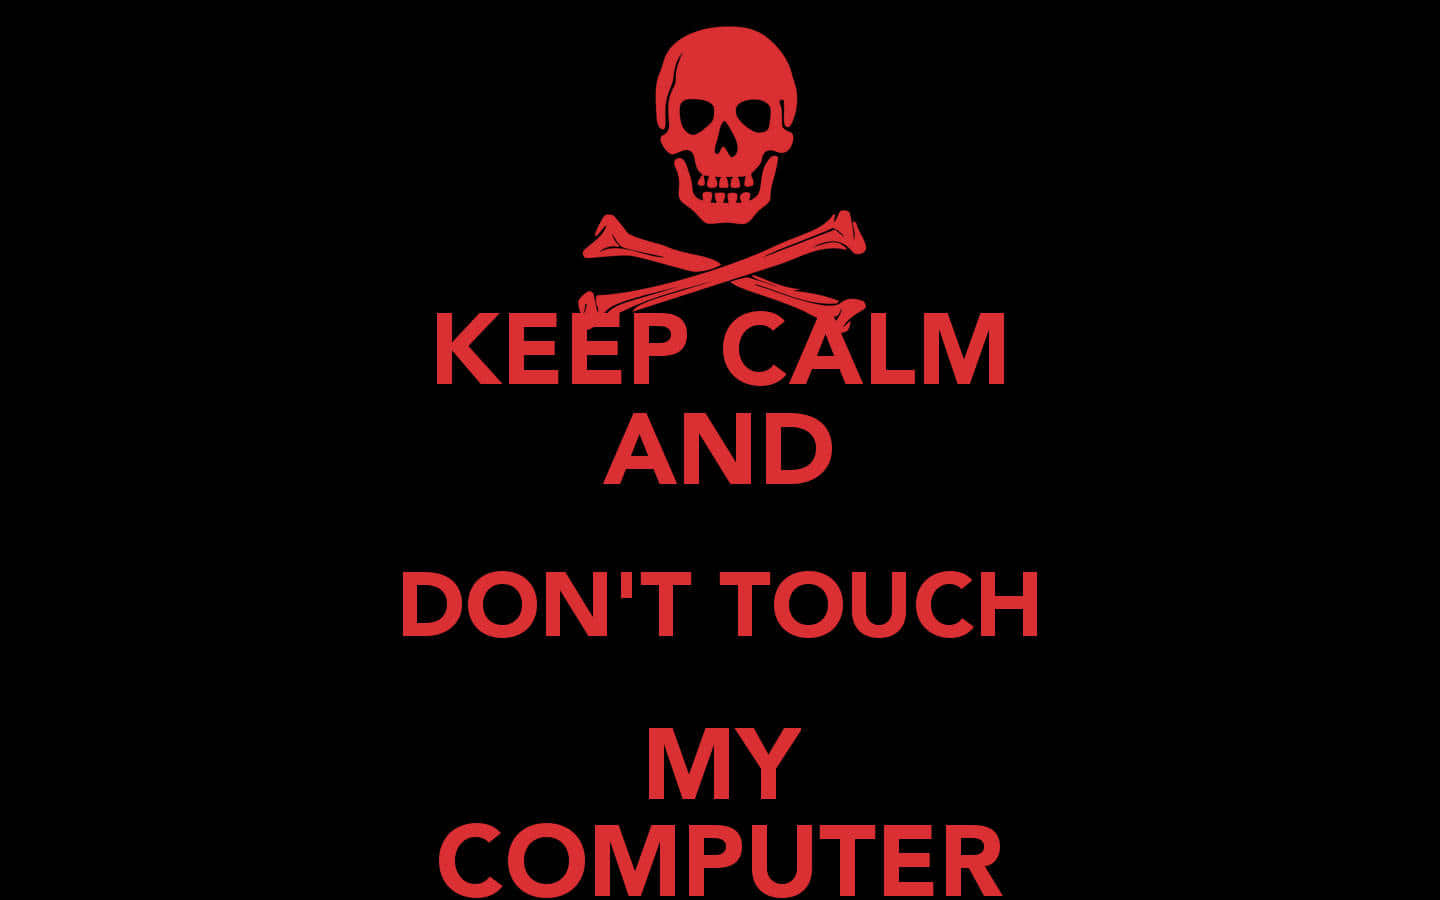 Protegemi Laptop De Intrusiones No Deseadas. Fondo de pantalla